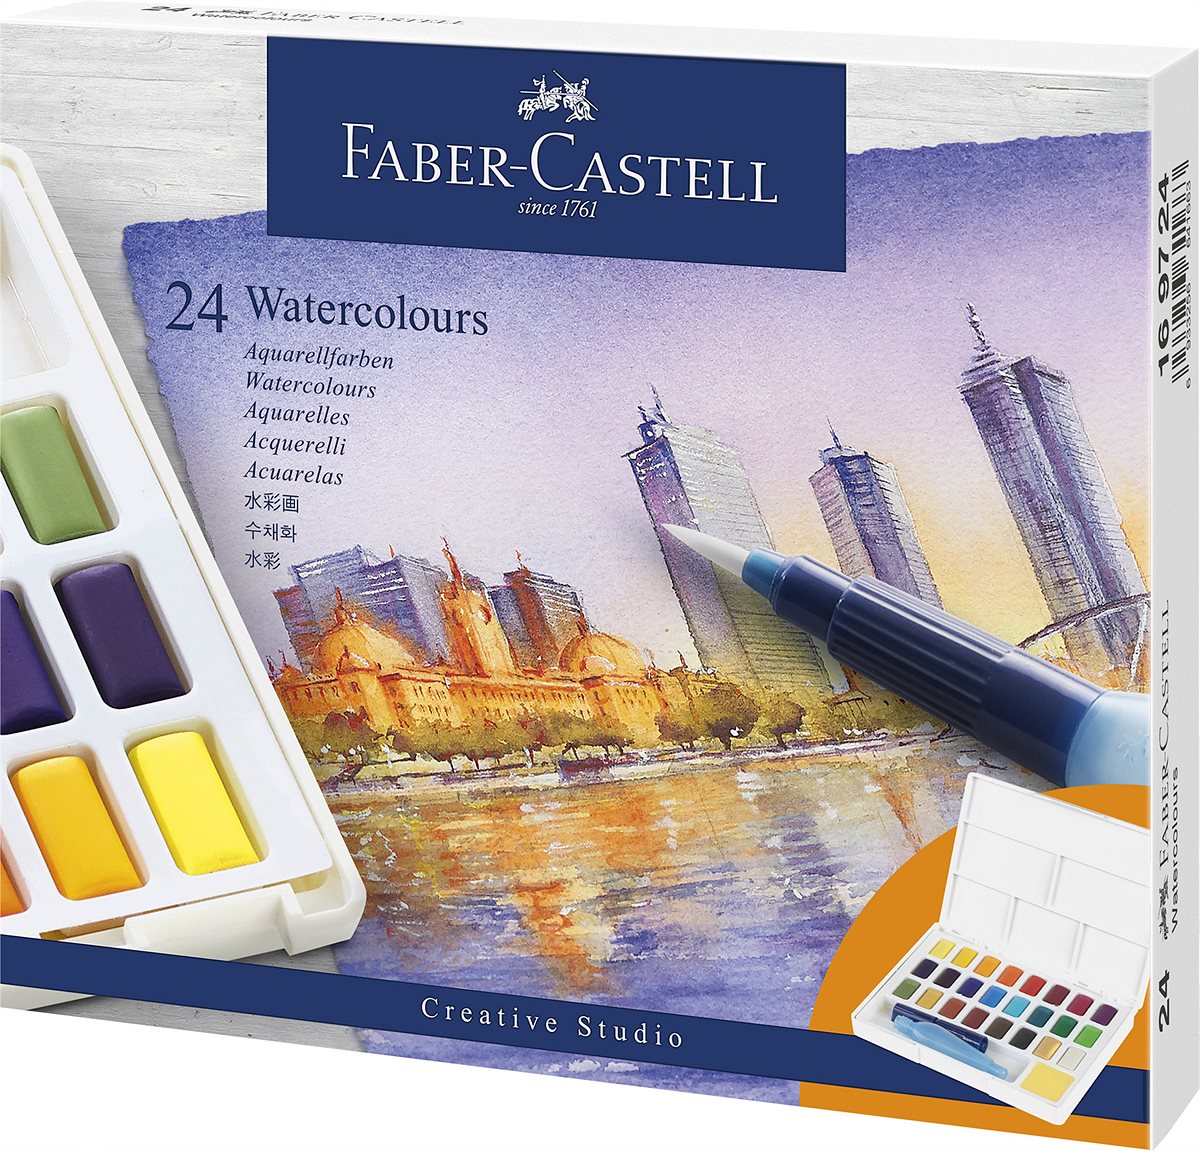 Faber-Castell_Aquarellfarben in Näpfchen_EUR 29